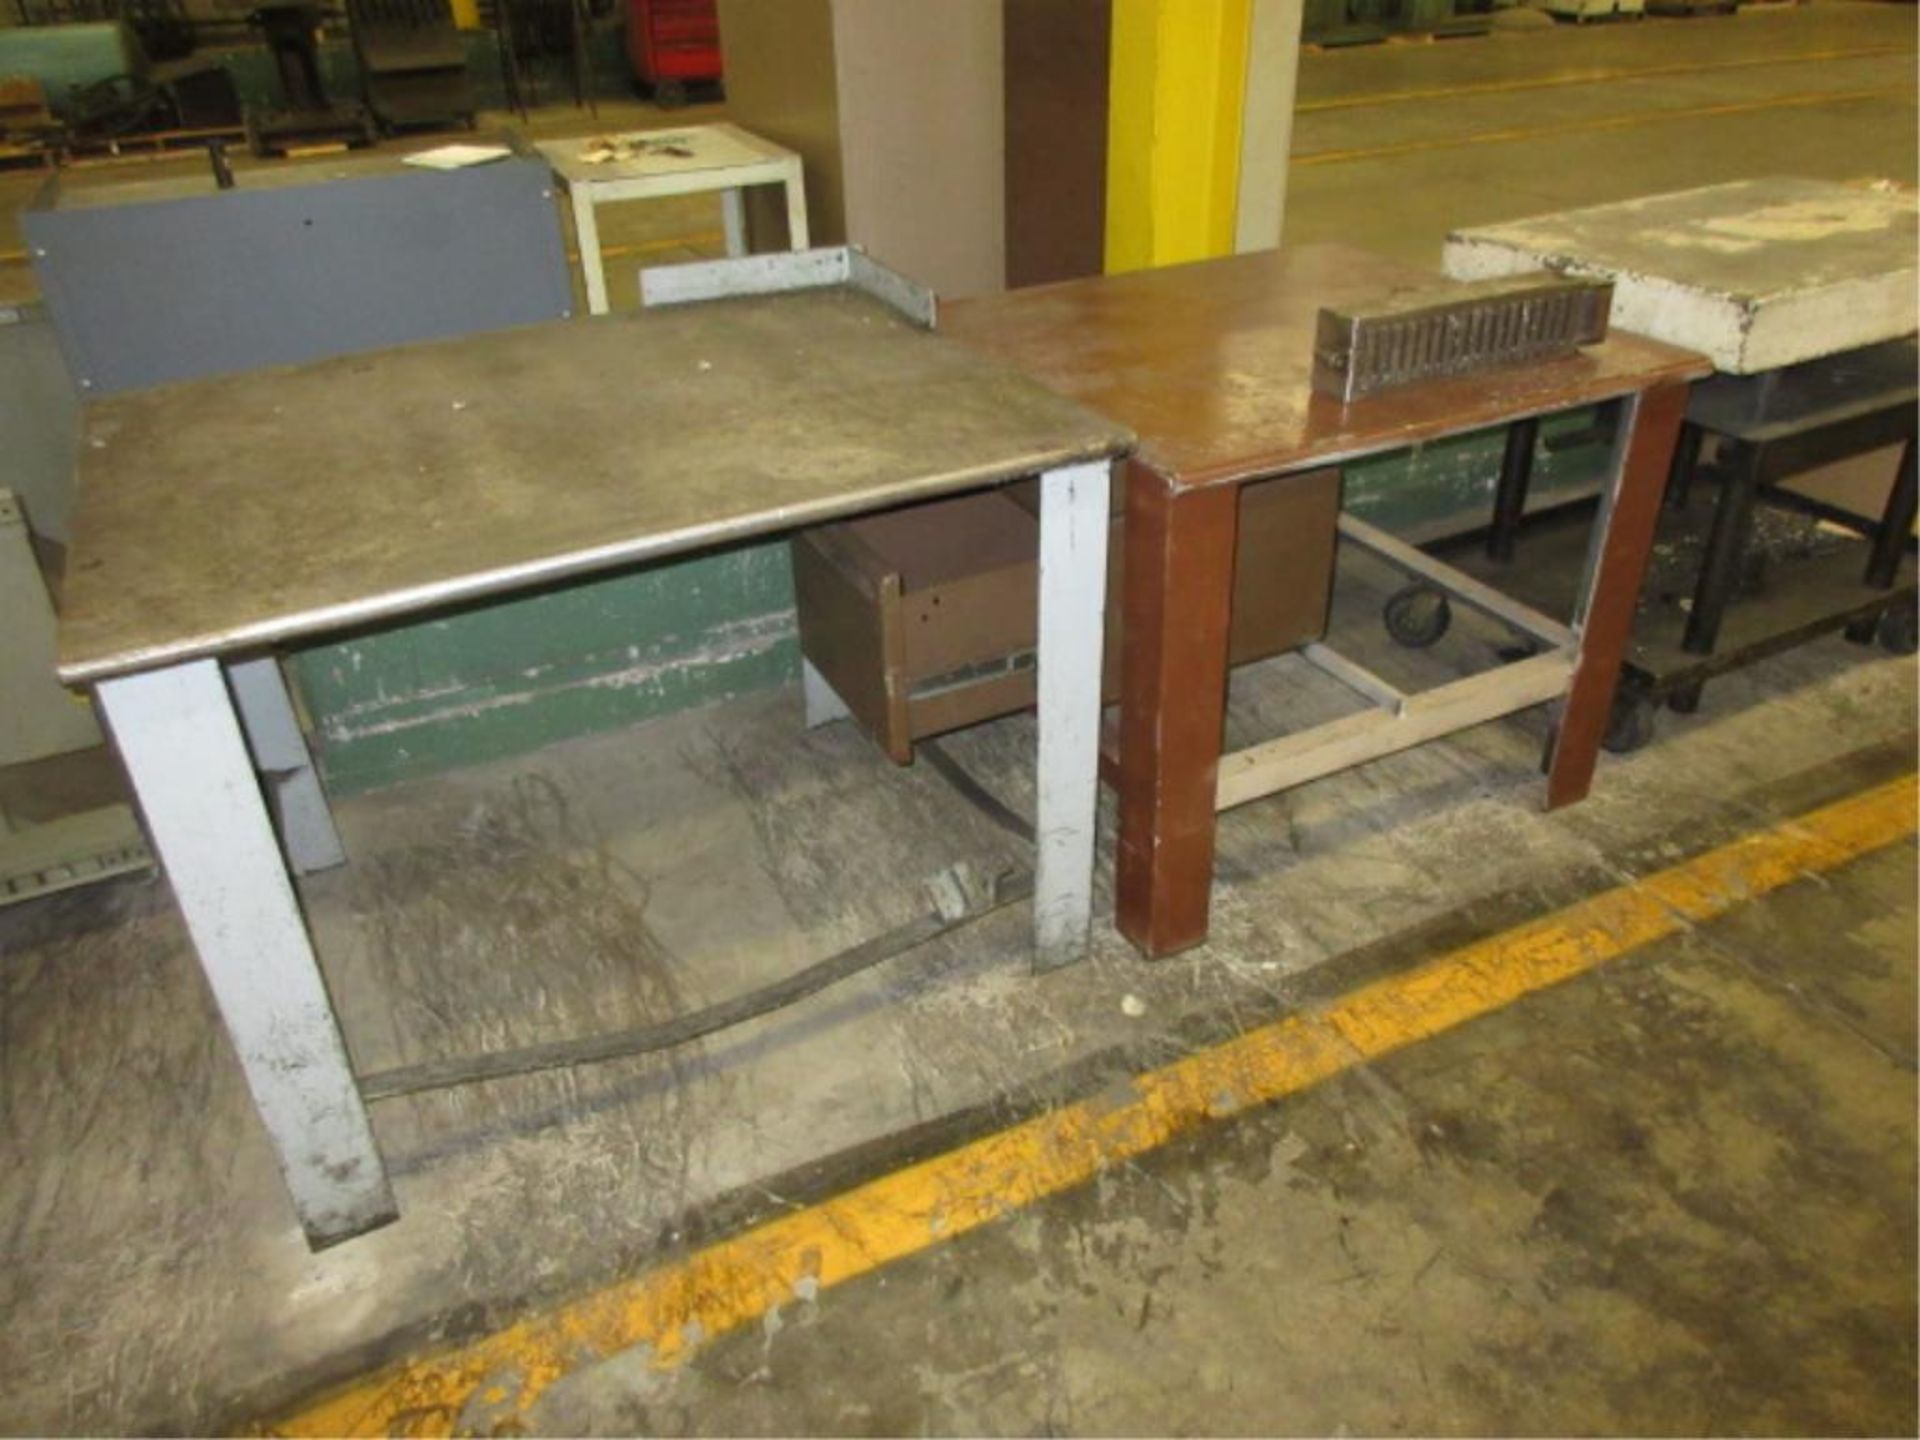 Shop Tables. Lot (7pcs) Heavy Duty Steel Shop Tables. HIT# 2179043. Loc: main floor. Asset Located - Image 3 of 5